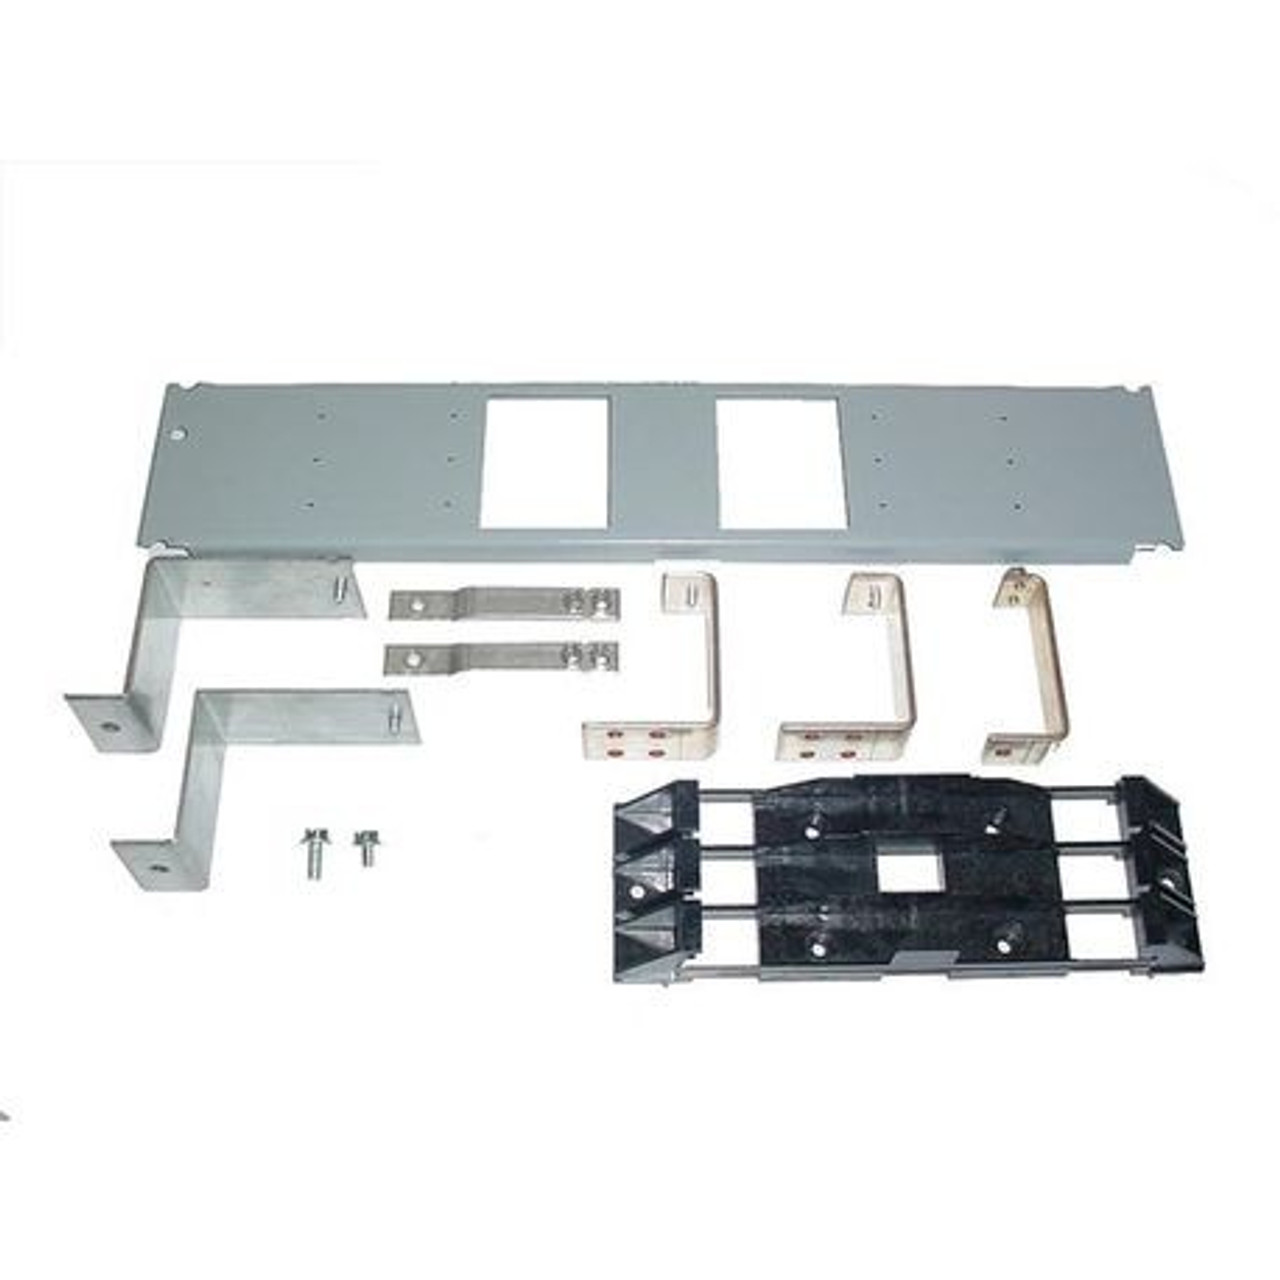 SBL
Breaker Kit for BL or BQD Breakers
for P4/S4/SPP Panelboards